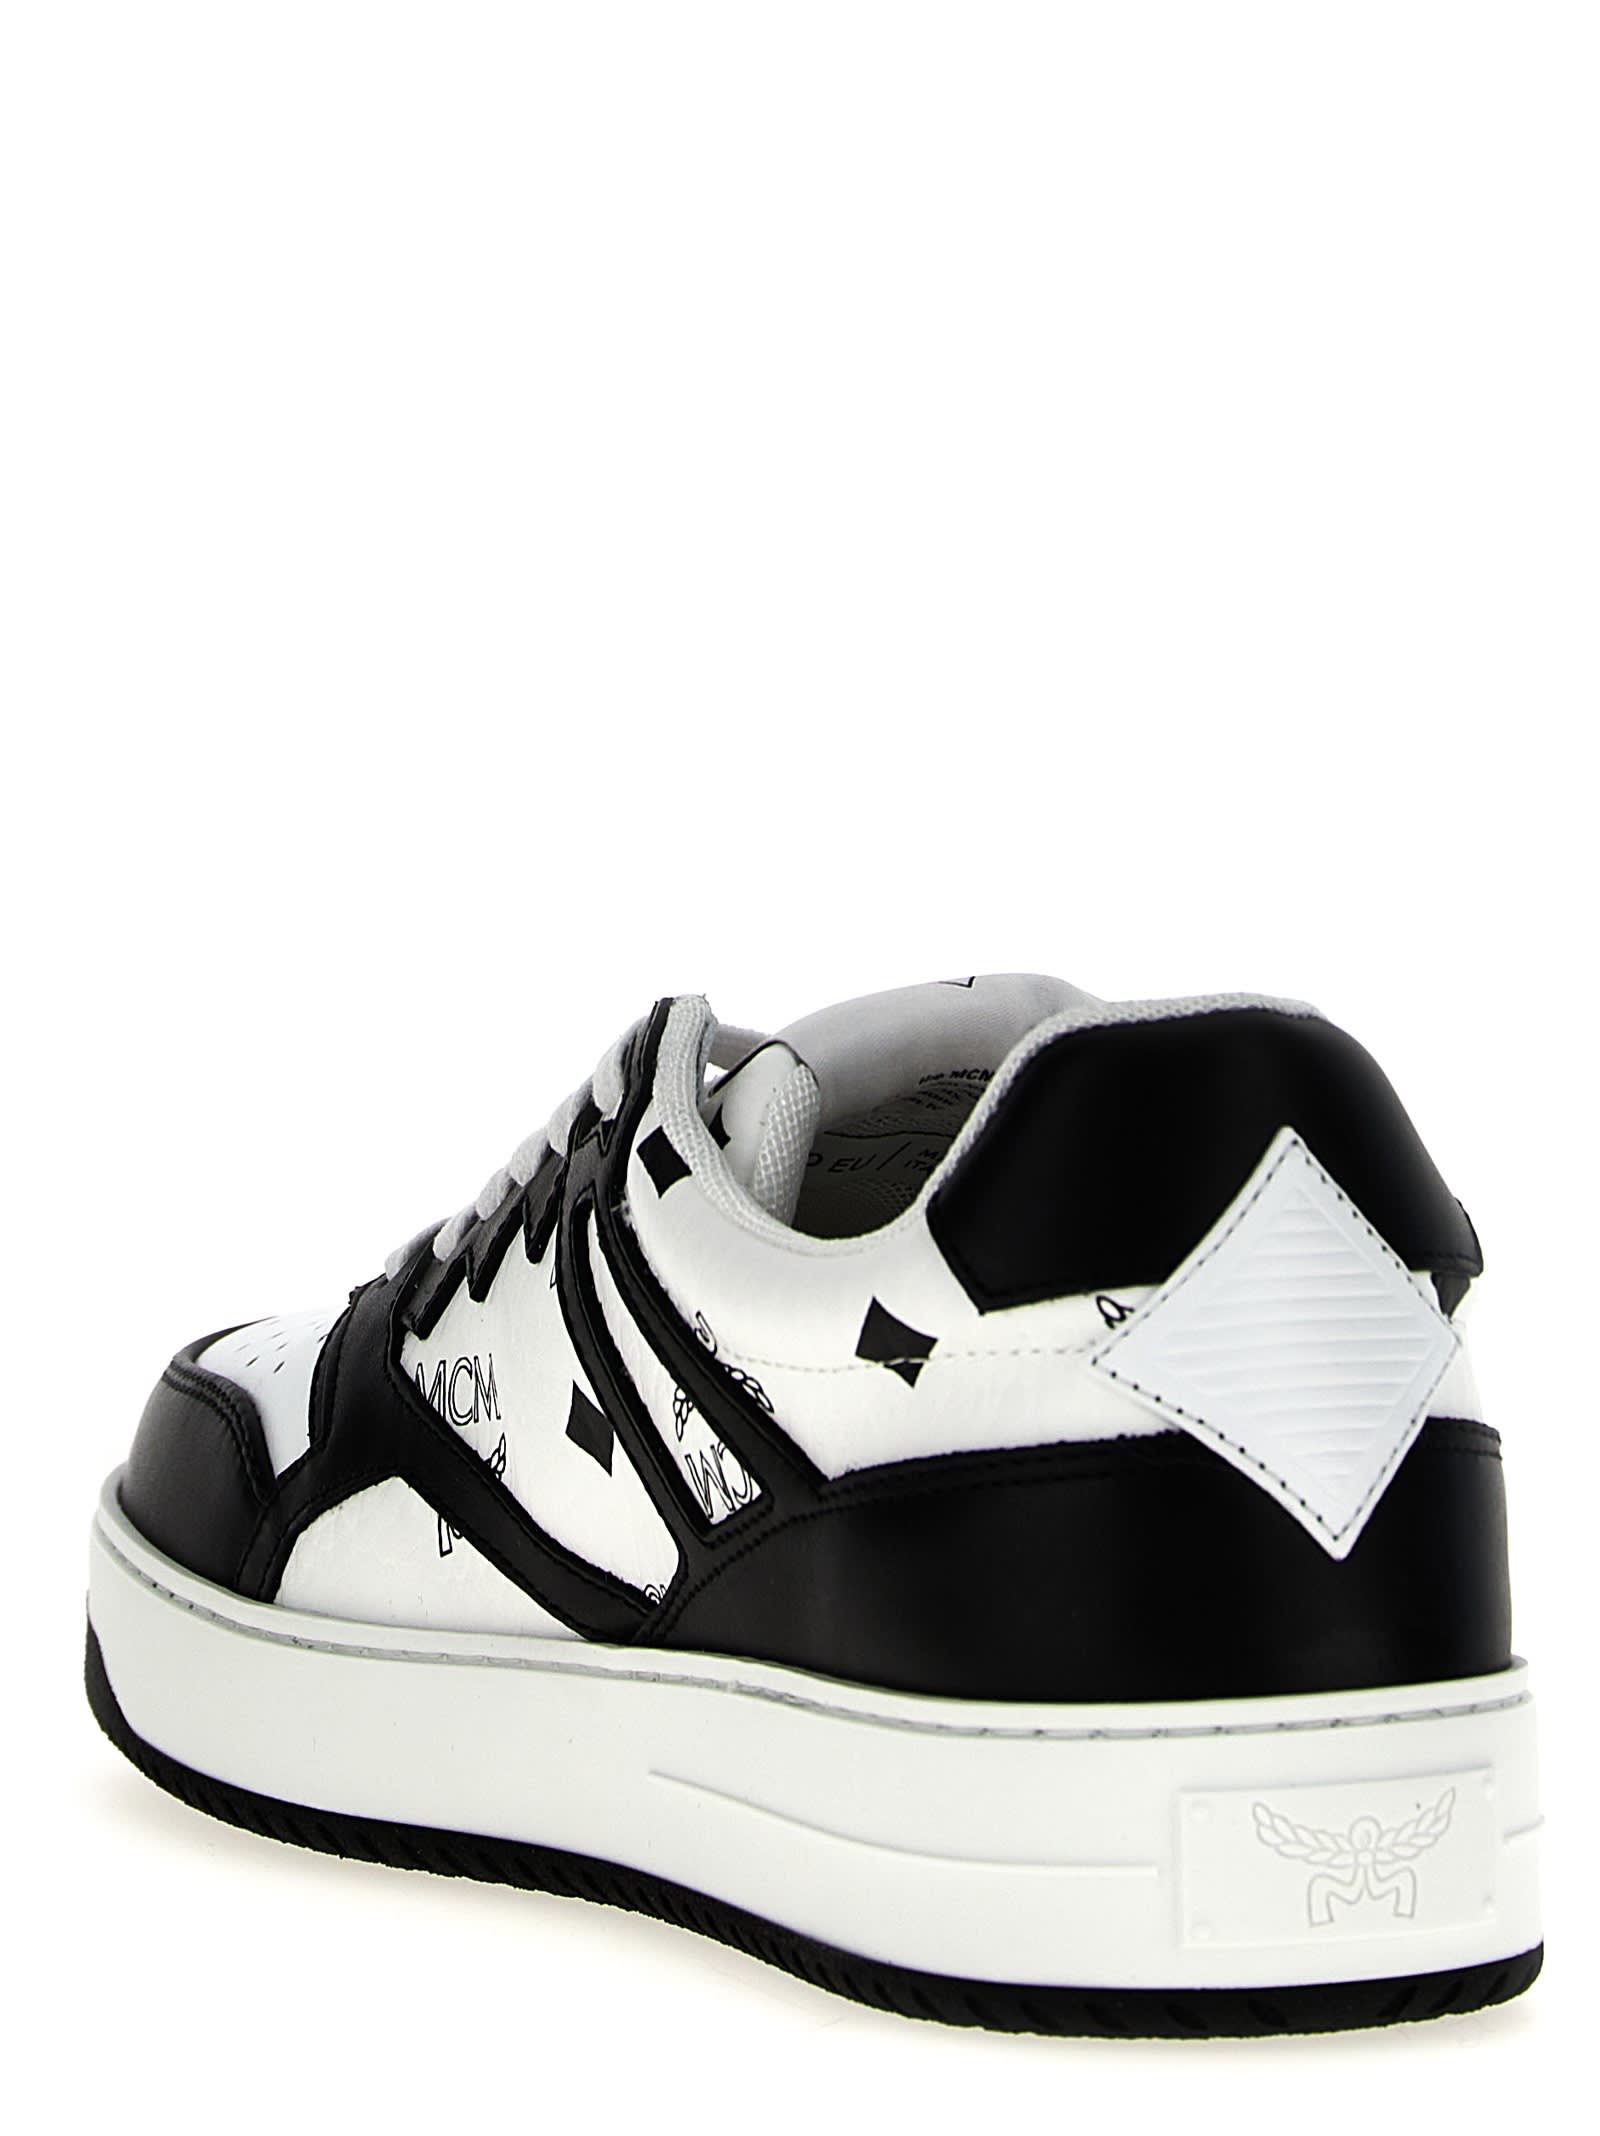 Shop Mcm Neo Terrain Sneakers In White/black